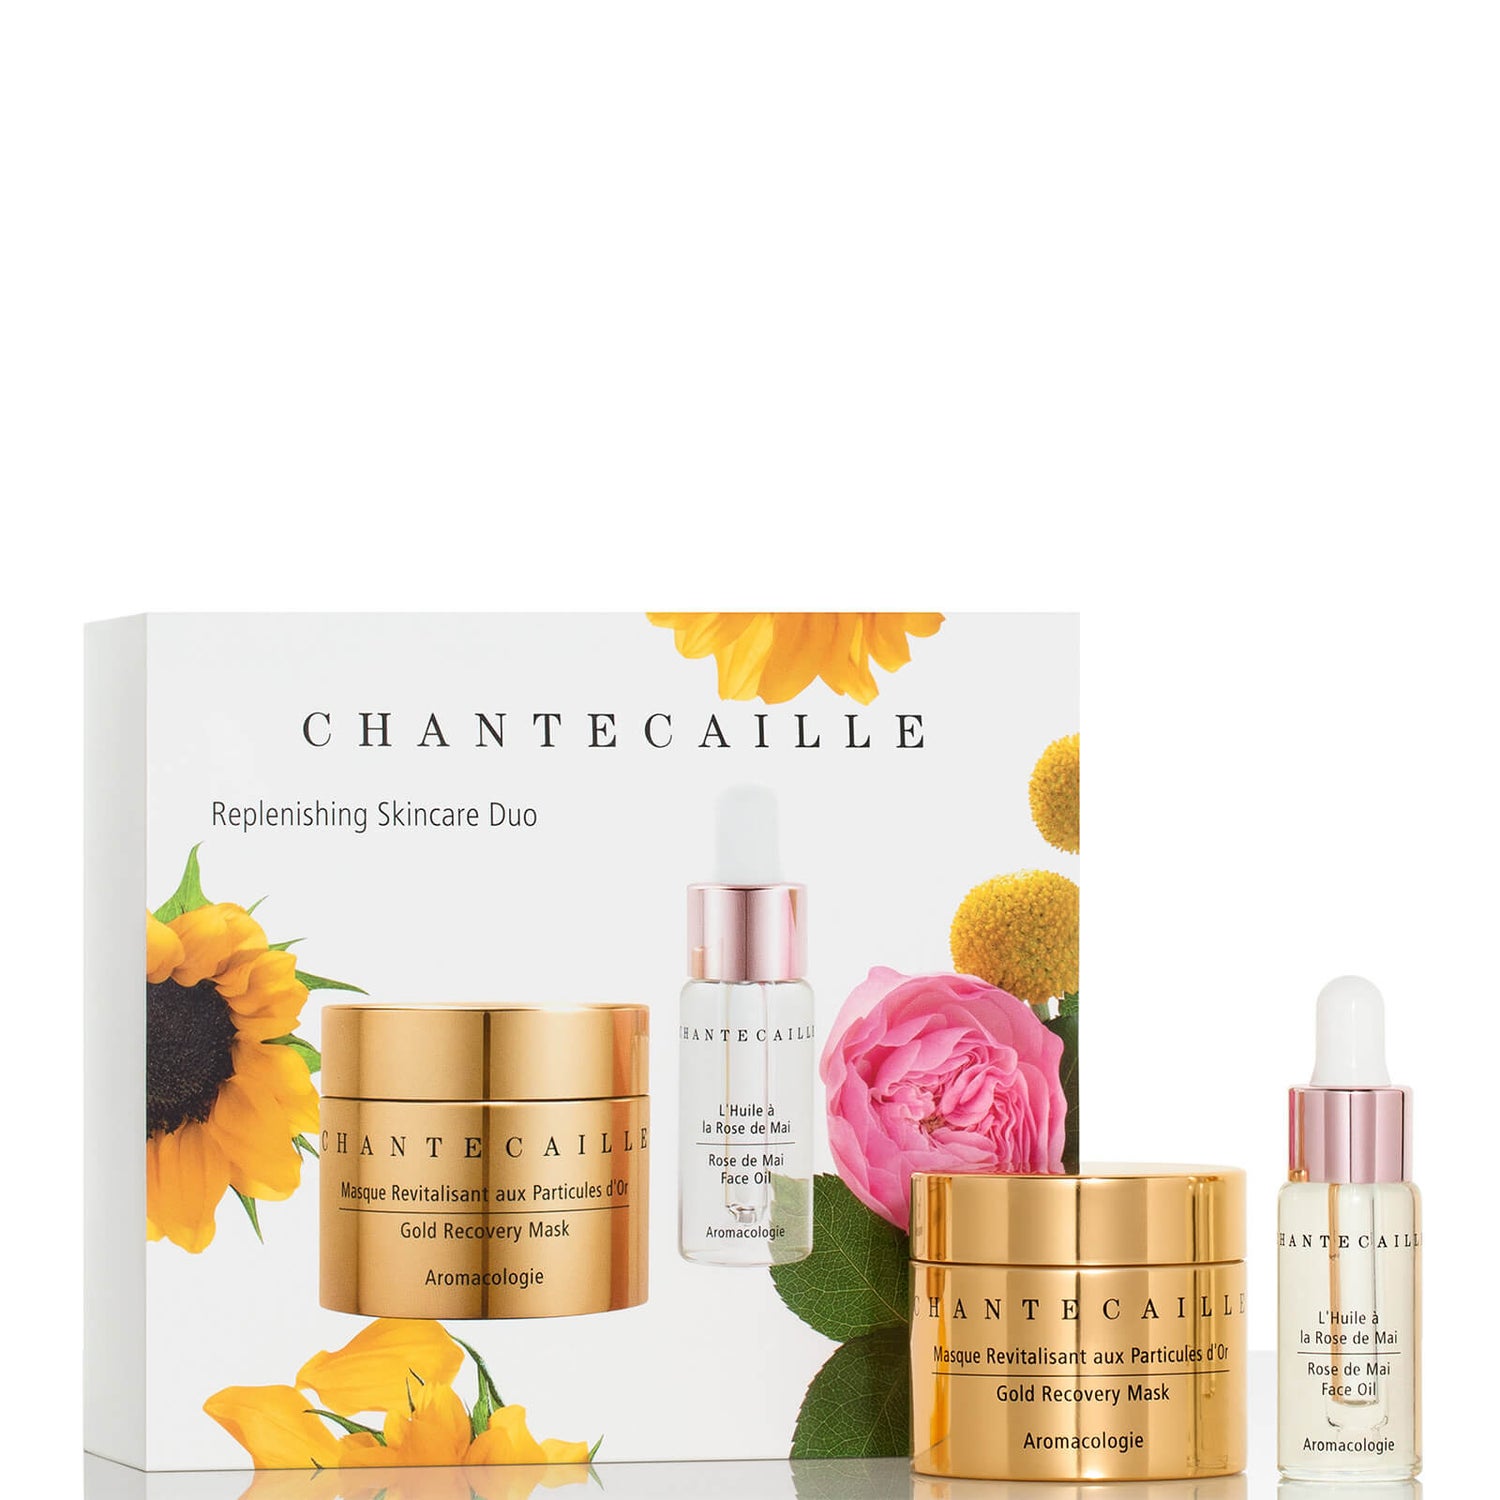 Chantecaille Replenishing Skincare Duo